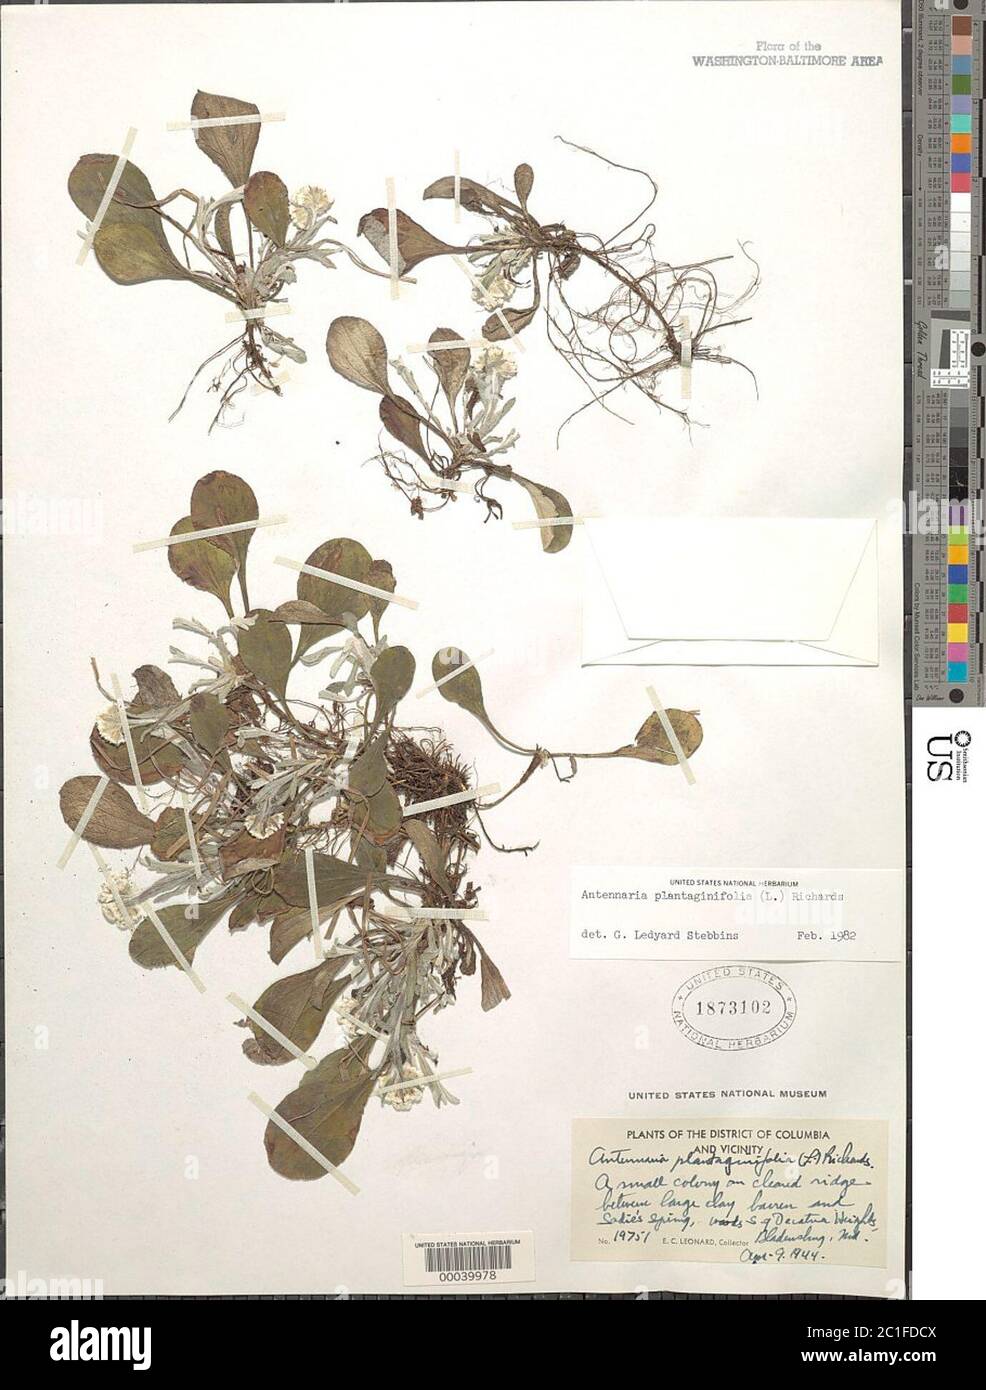 Antennaria plantaginifolia L Richardson Antennaria plantaginifolia L Richardson. Stock Photo